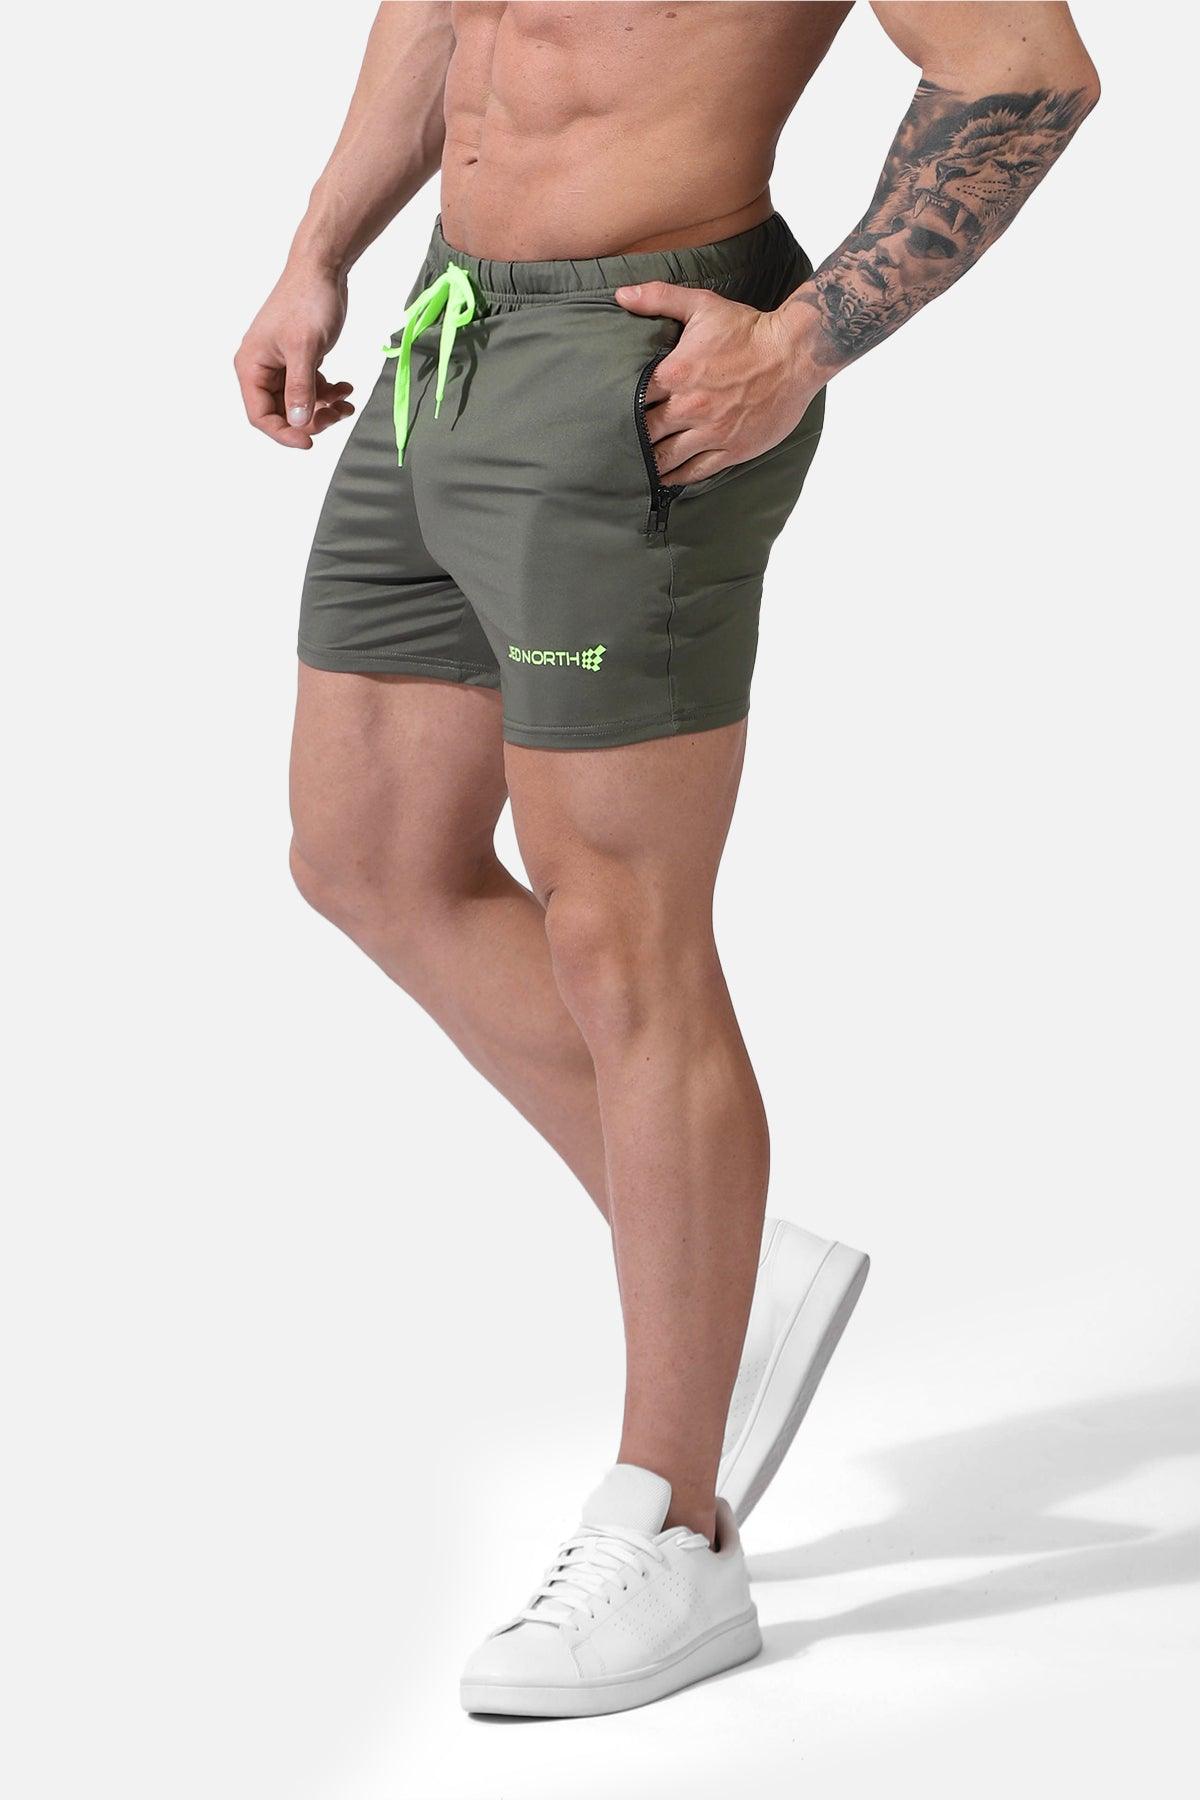 Agile Bodybuilding 4'' Shorts w Zipper Pockets - Olive